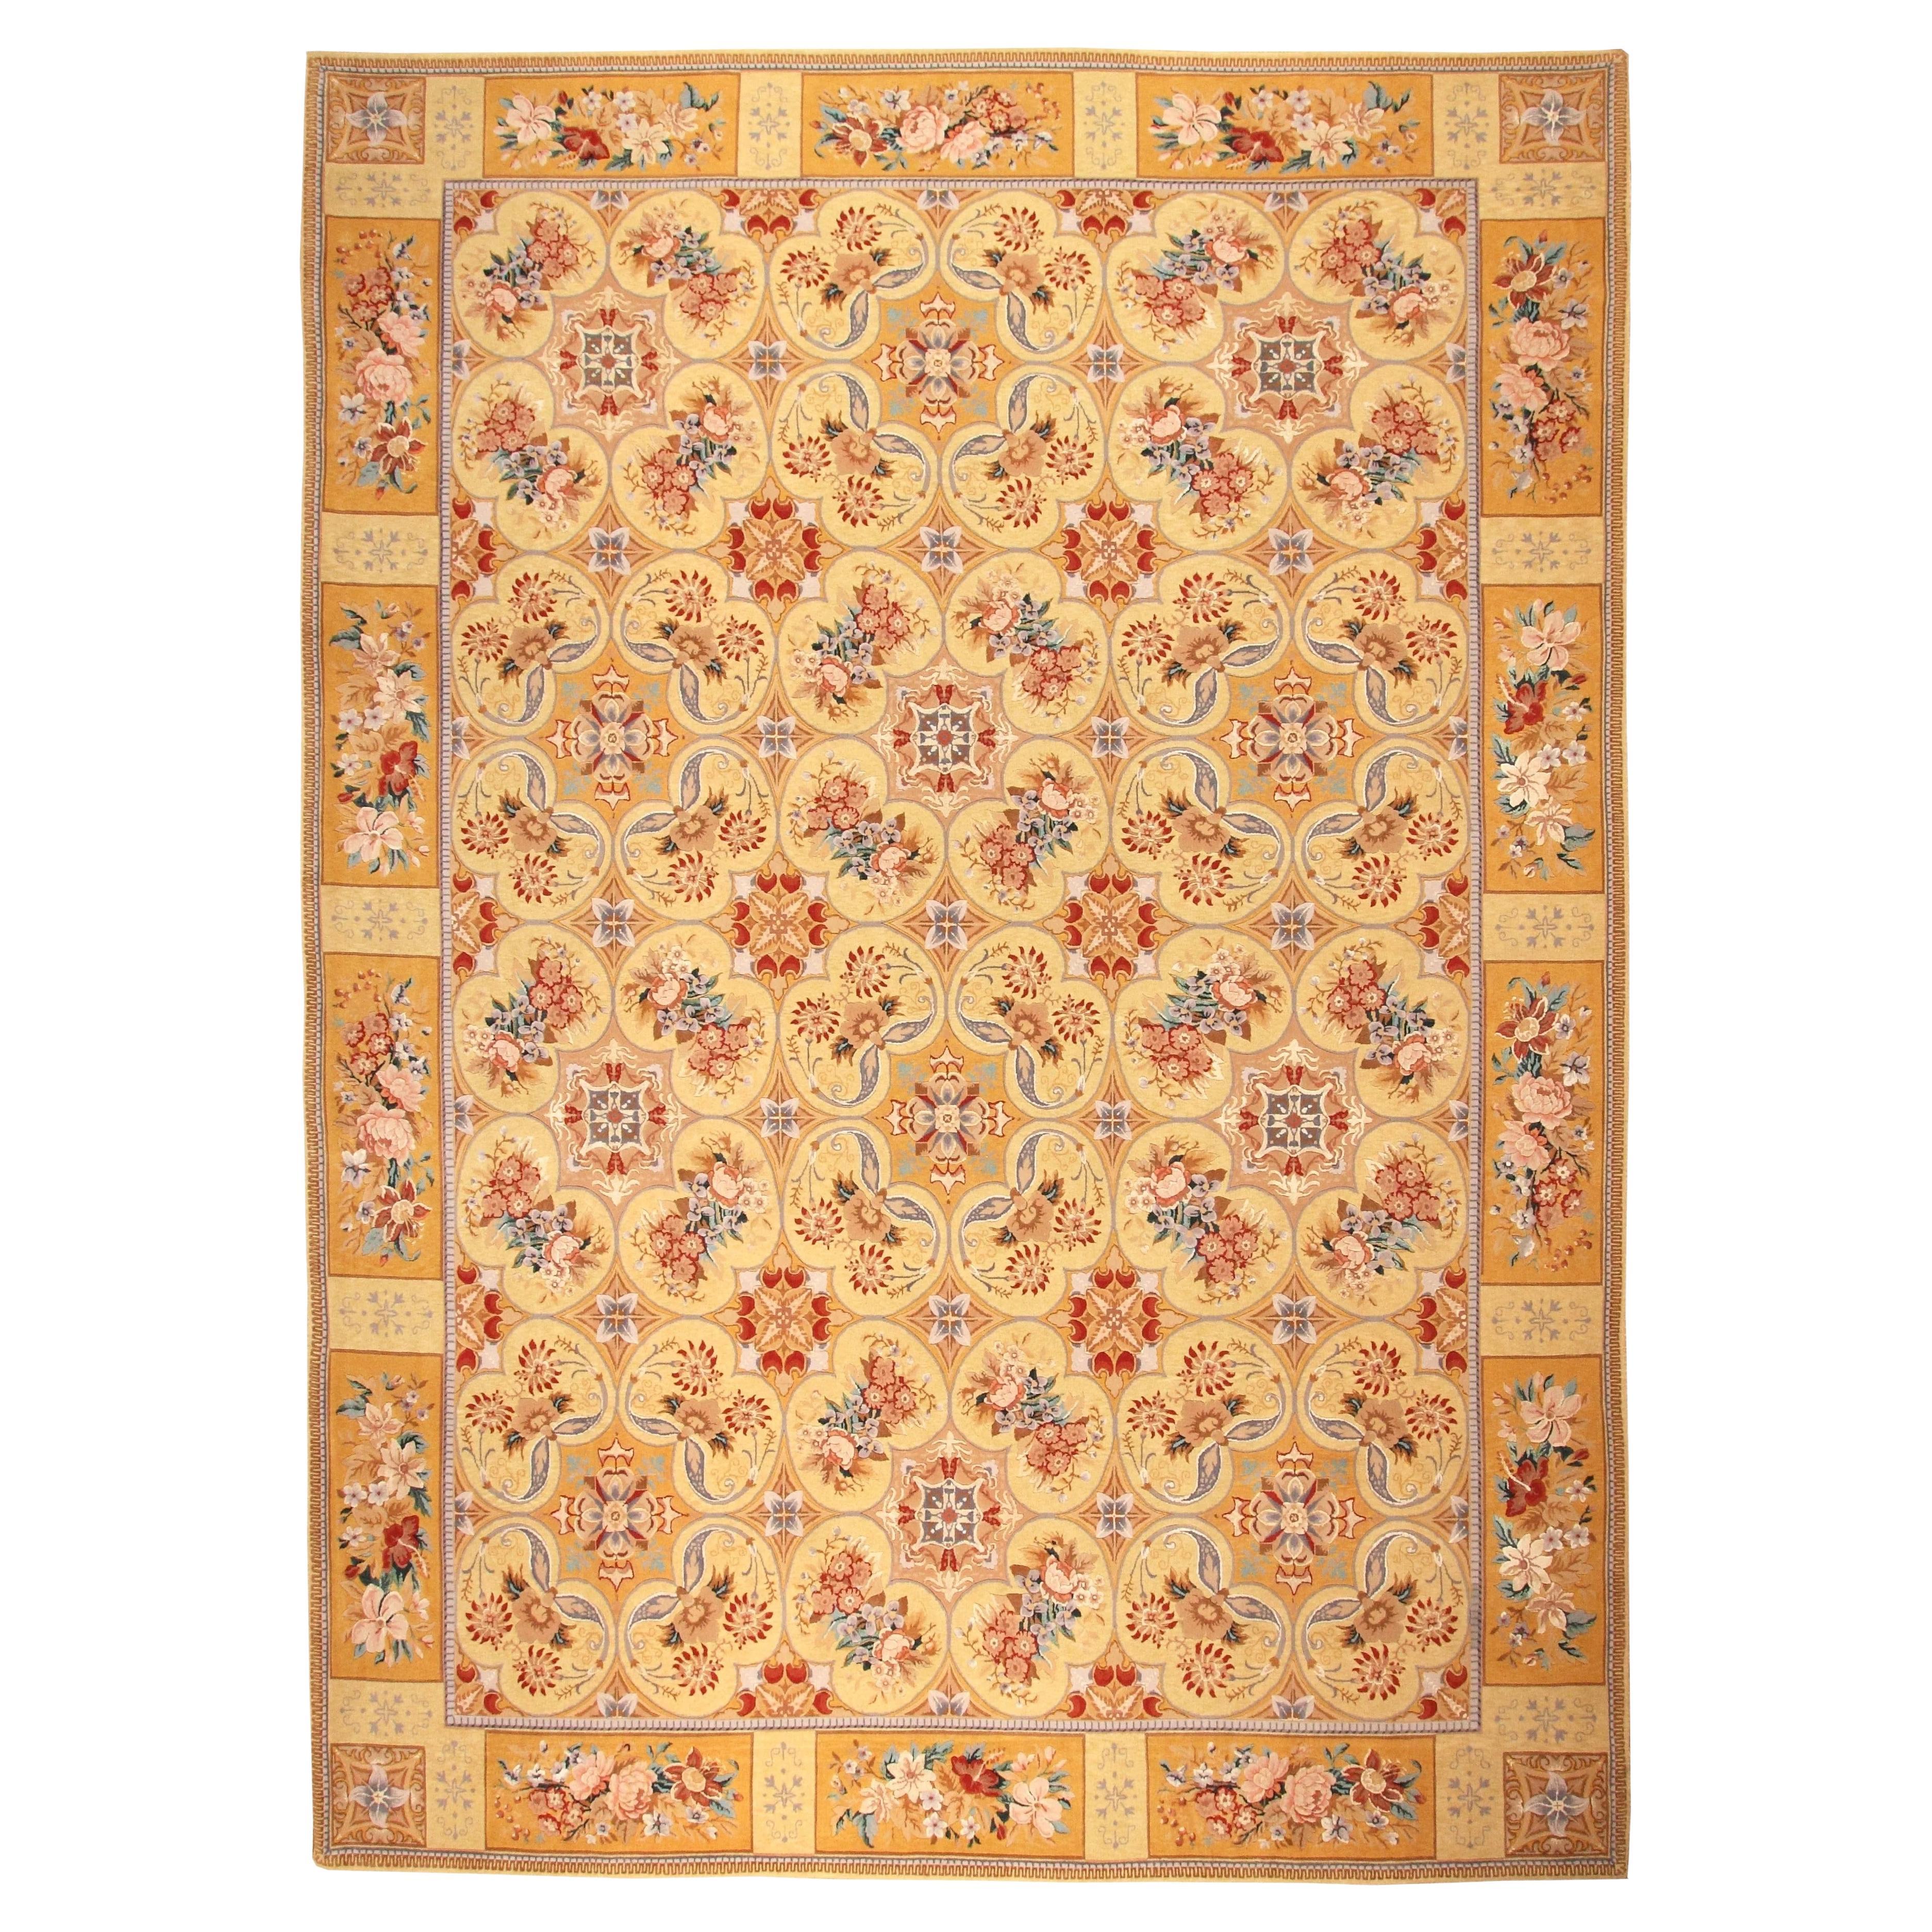 VIA COMO 'Arte Vecchia' Carpet Hand Knotted Wool Silk Rug 10x14 ft One of a Kind